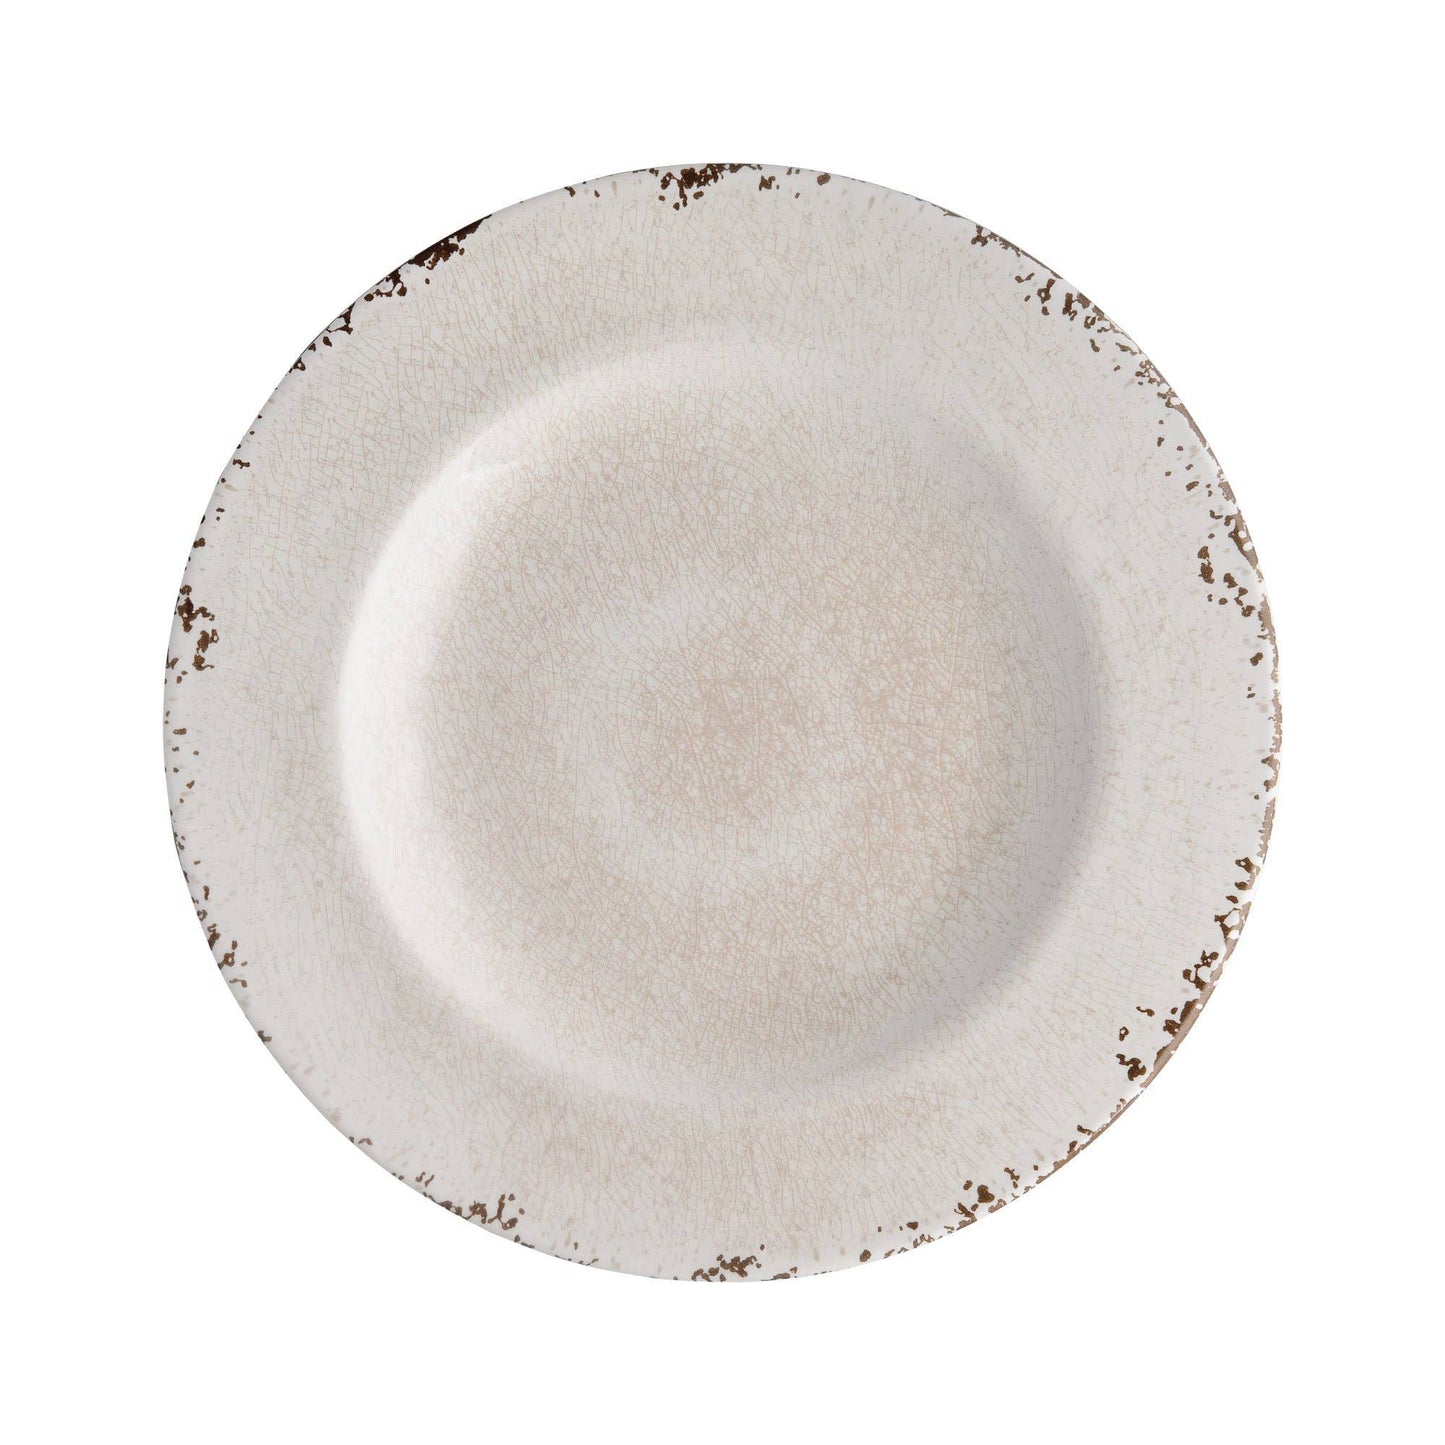 Crackle 8 3/4" Melamine Plate in Cream- SALE